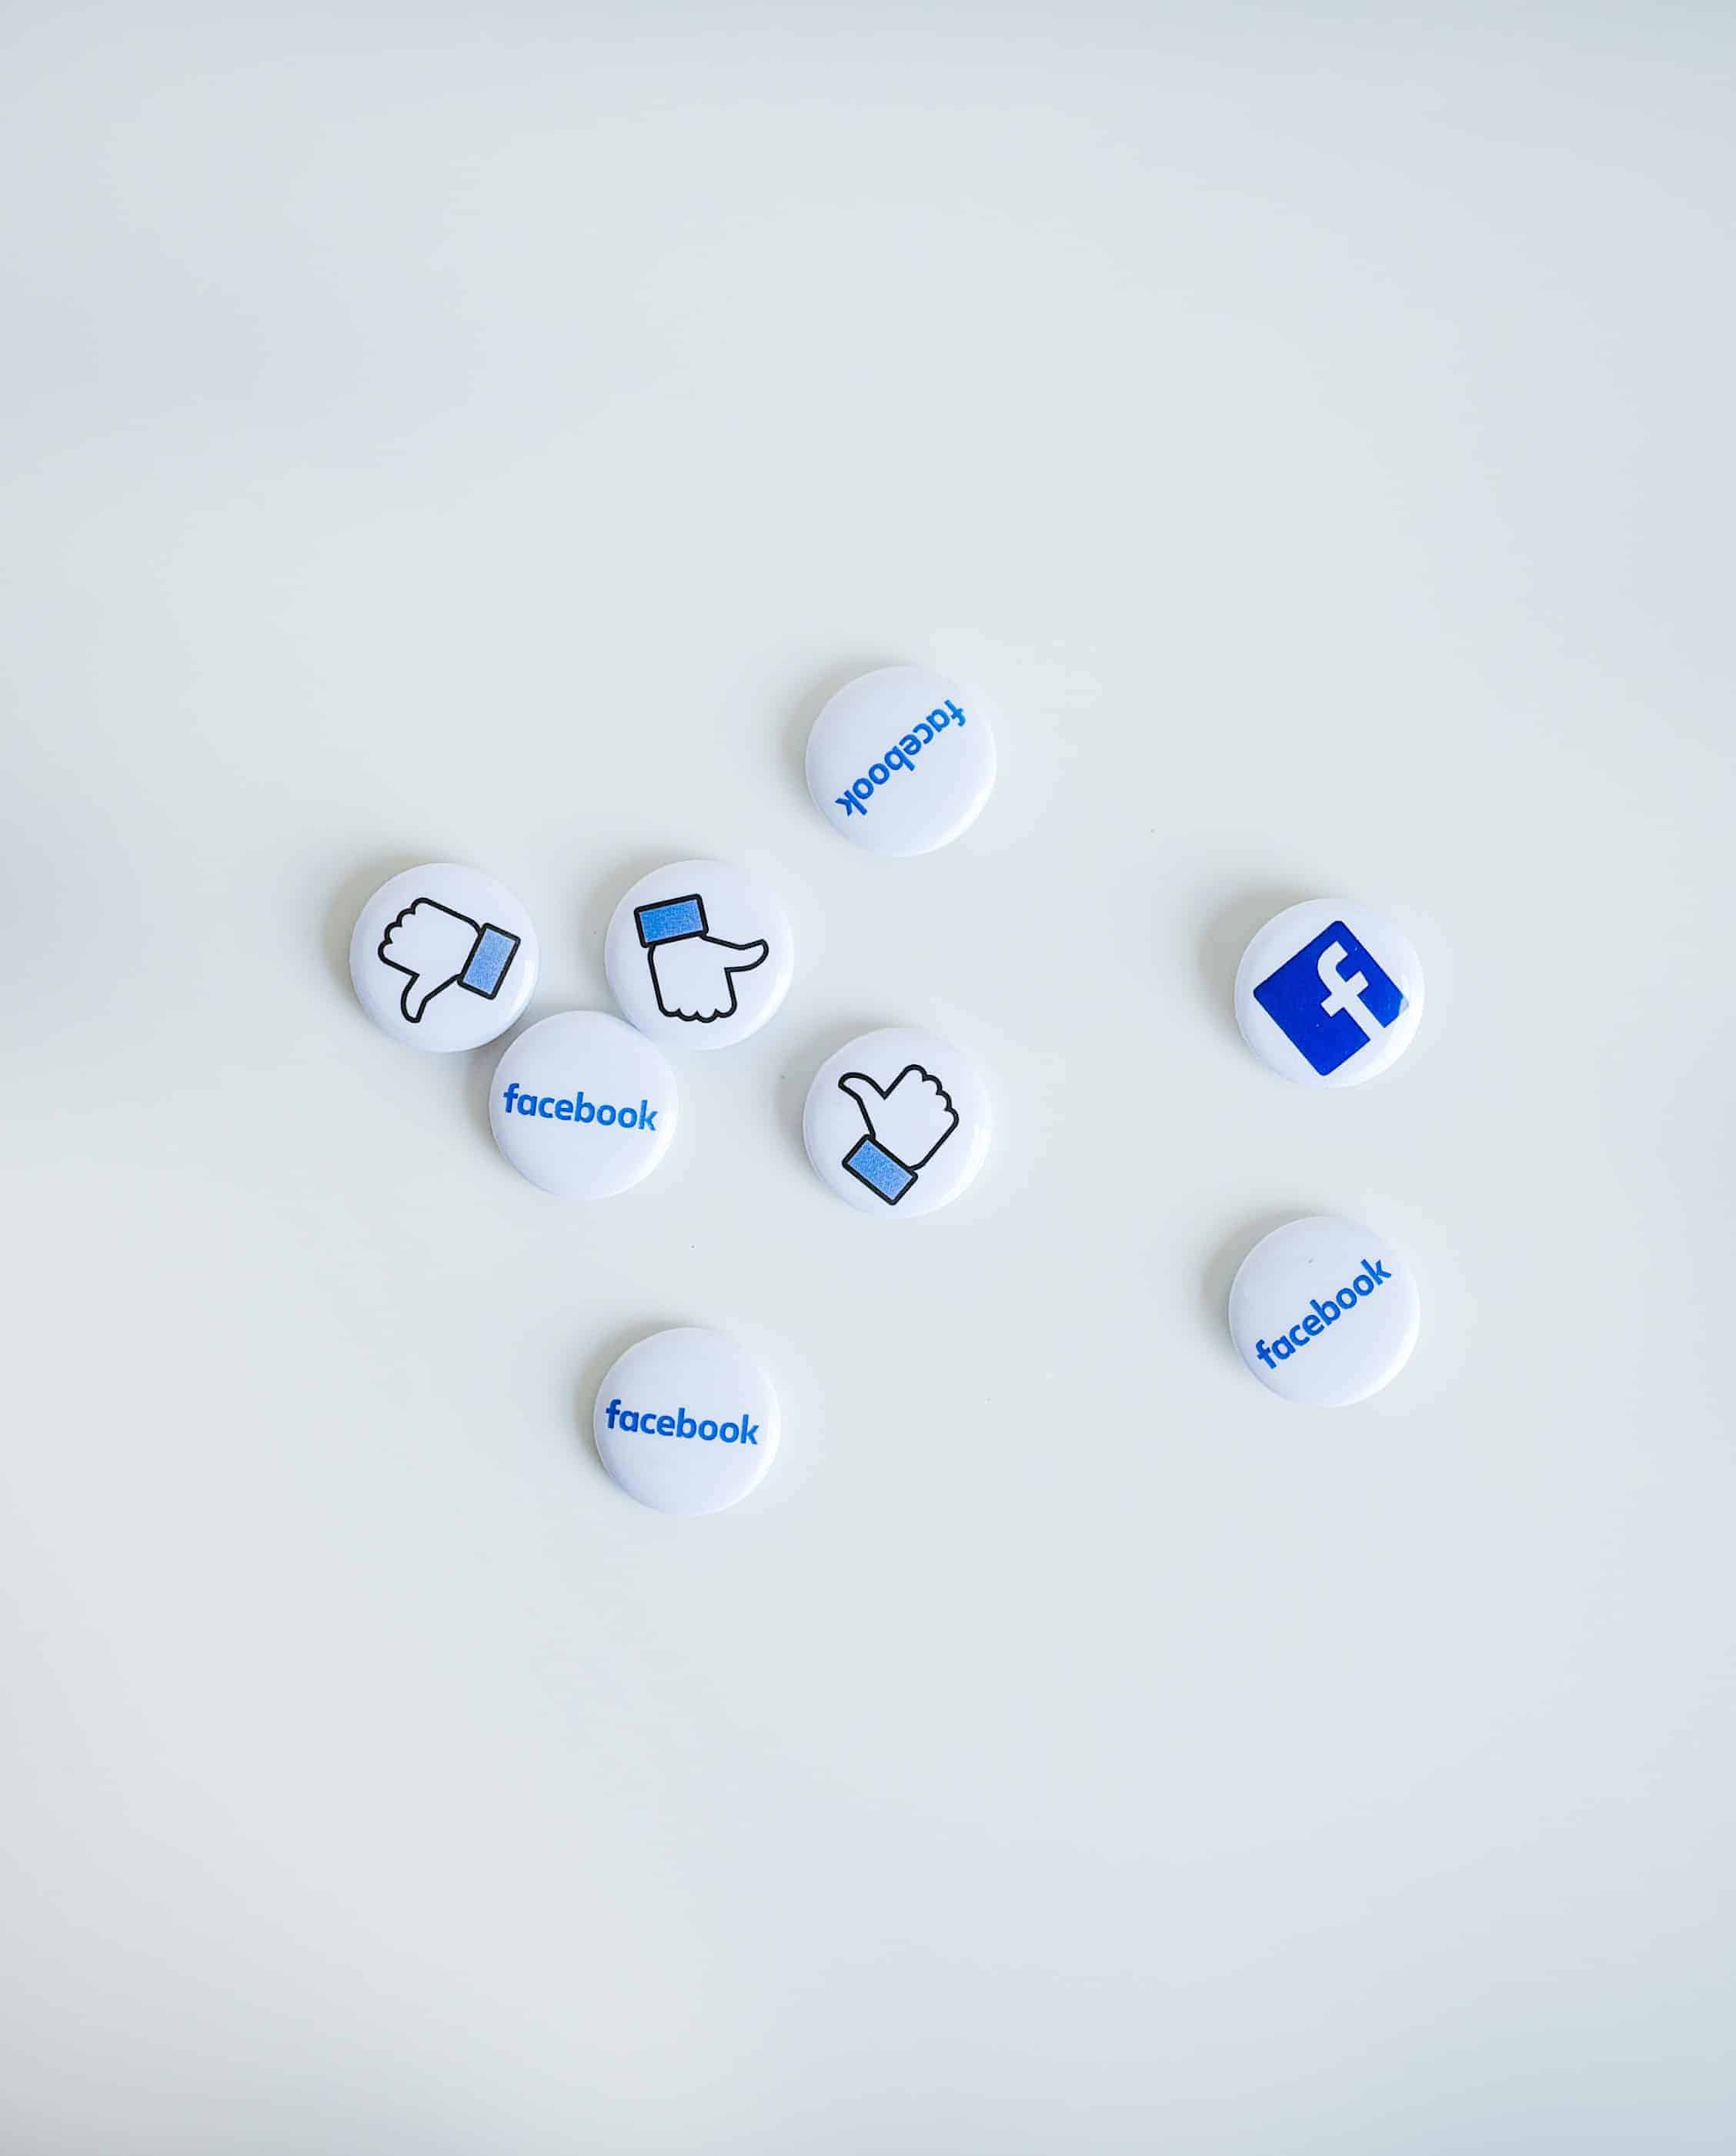 Facebook like and Facebook logo pins